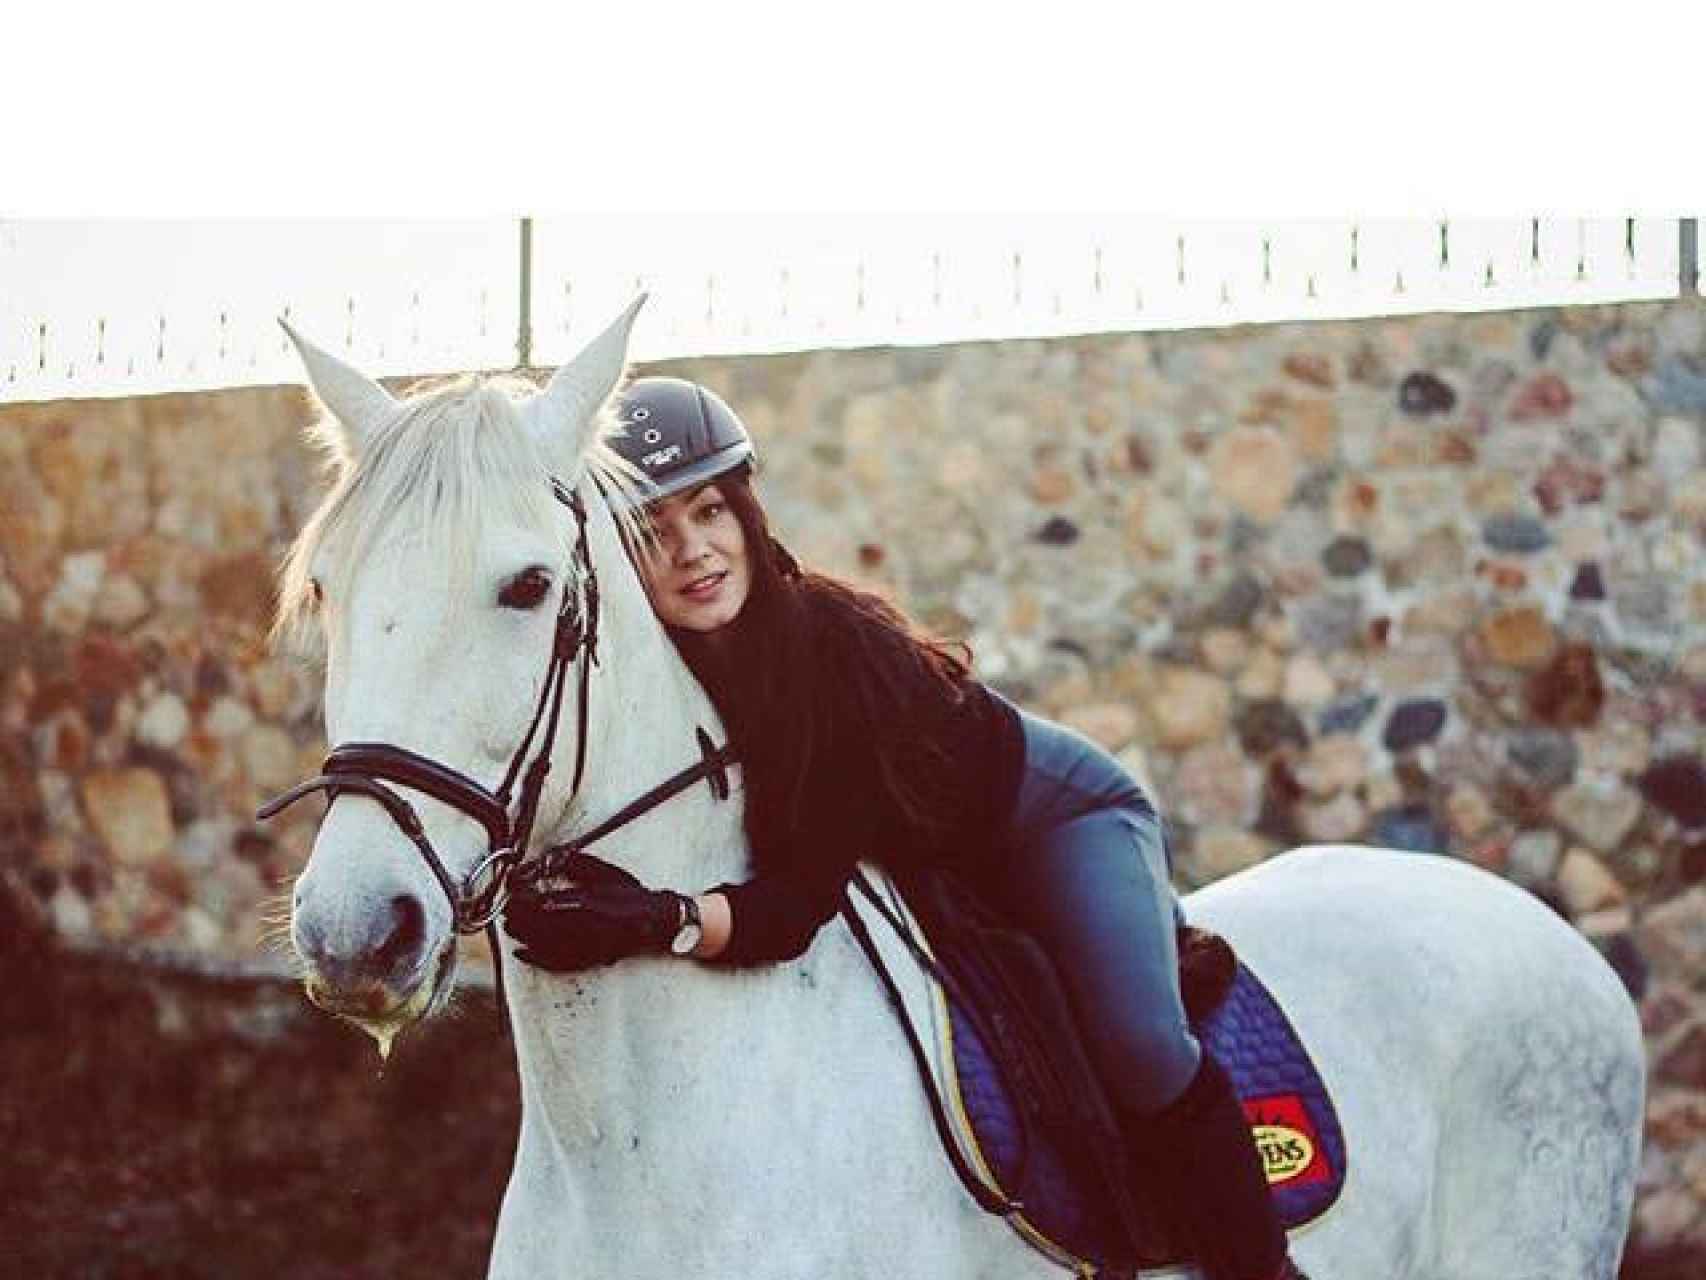 La joven montando a caballo.